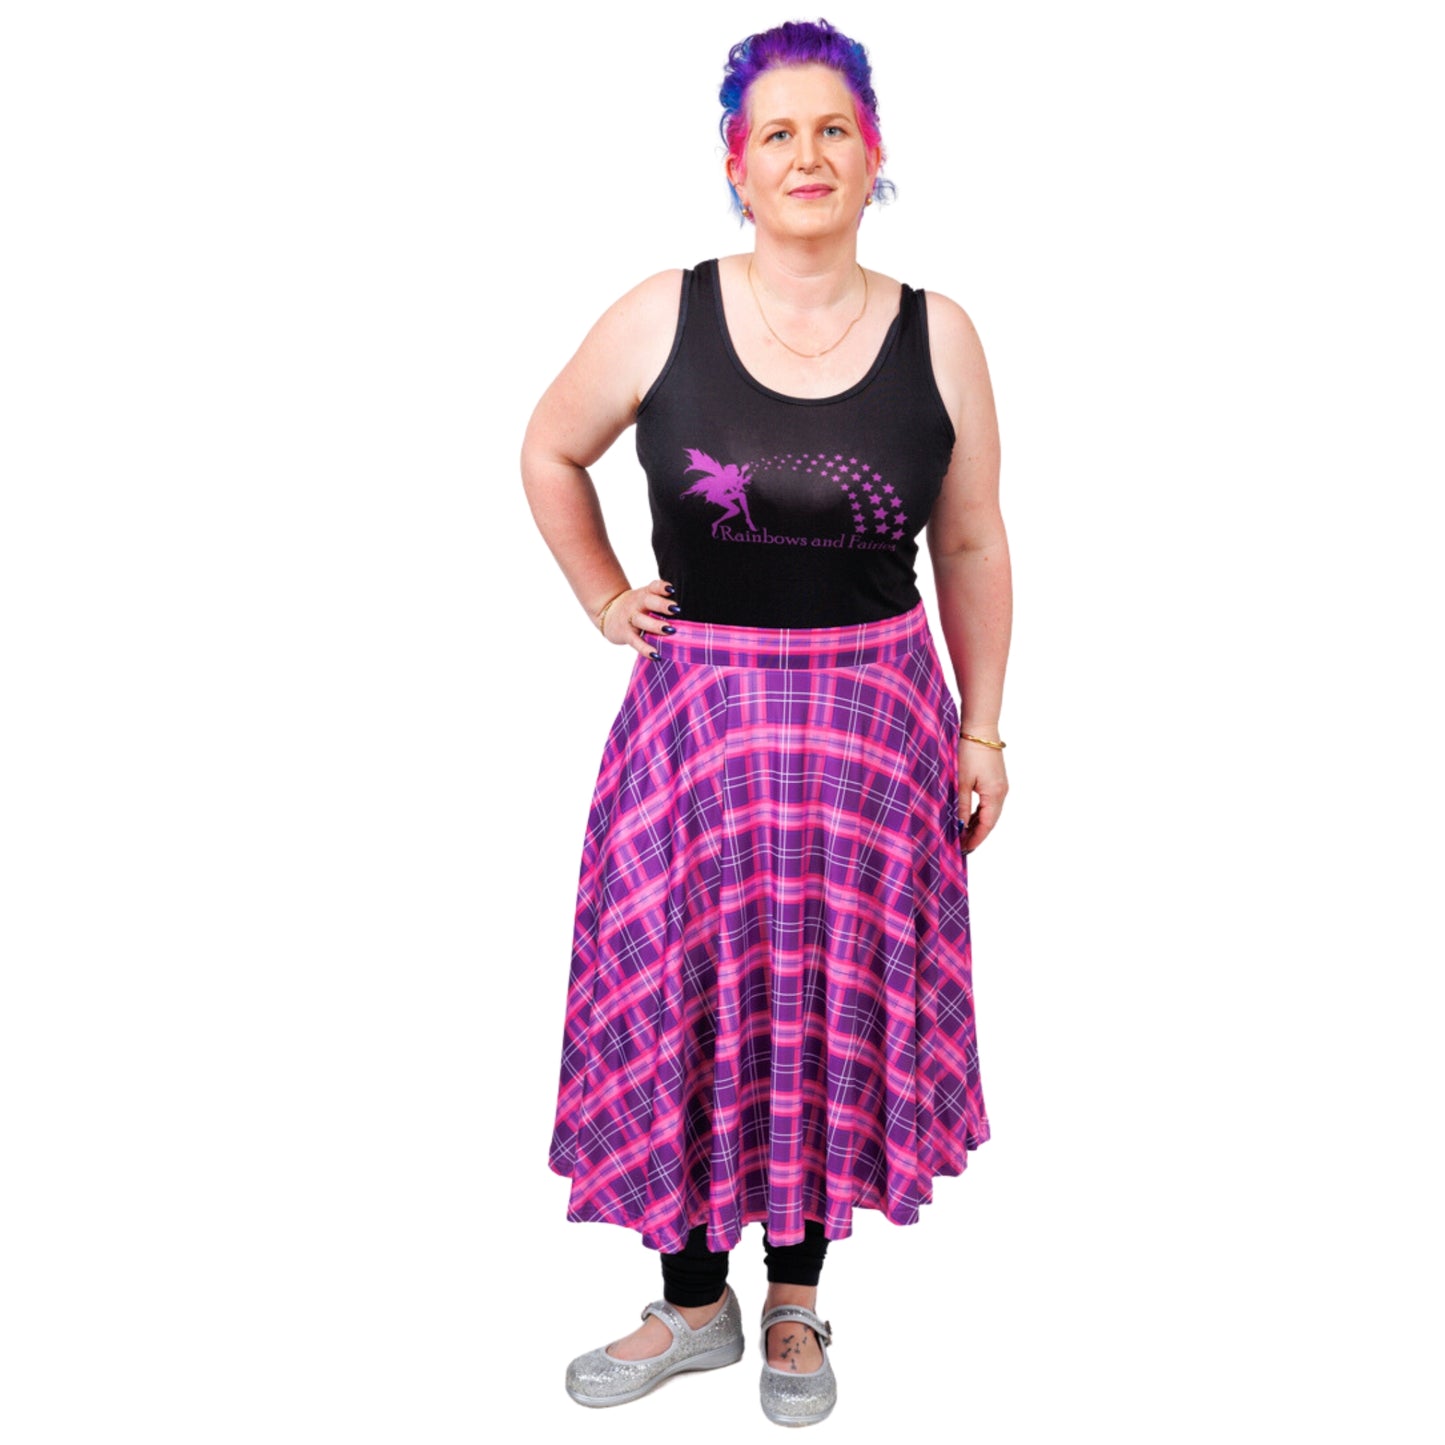 Purple Plaid Swishy Skirt by RainbowsAndFairies.com (Purple Check - Tartan - Skirt With Pockets - Circle Skirt  - Vintage Inspired) - SKU: CL_SWISH_PLAID_PUR - Pic 04